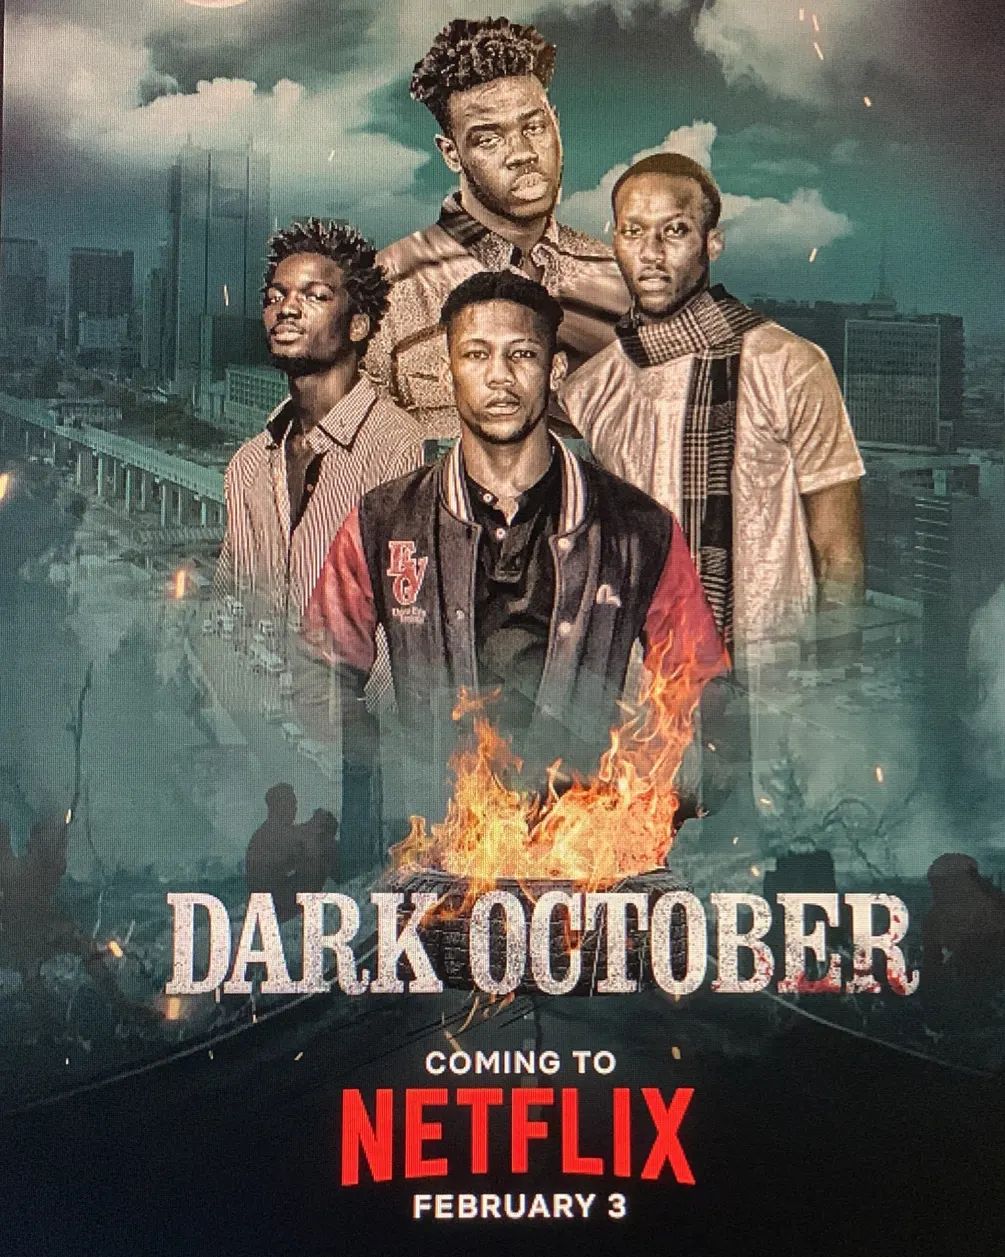 326000716 6251905281495446 6994097914089074307 n - Dark October: An Aluu 4 Inspired True-Crime Story To Debut on Netflix Feb 3rd